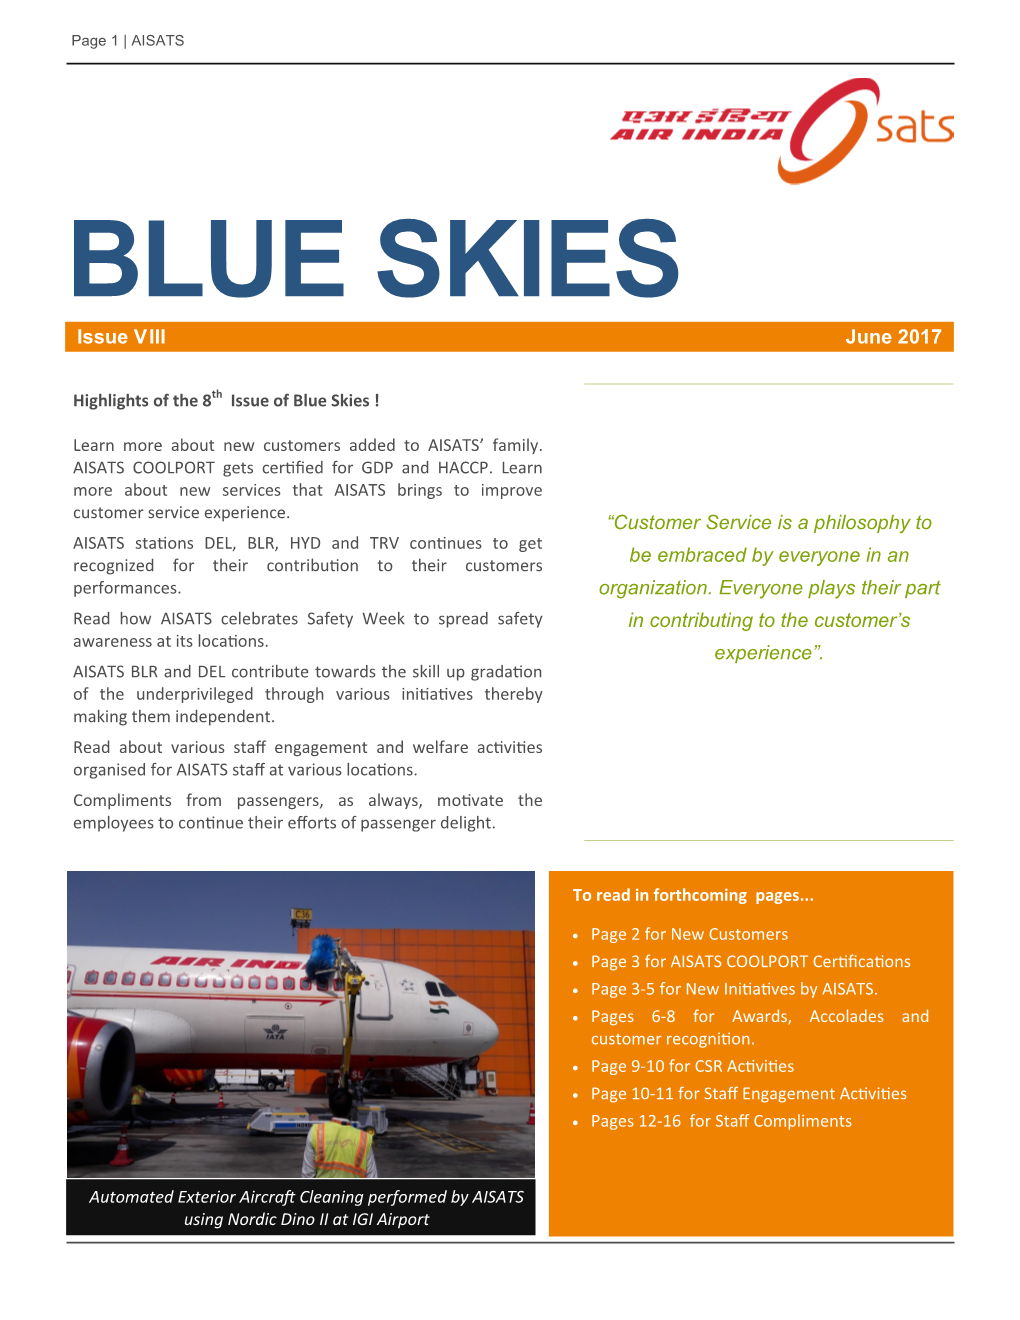 BLUE SKIES Issue V III June 2017